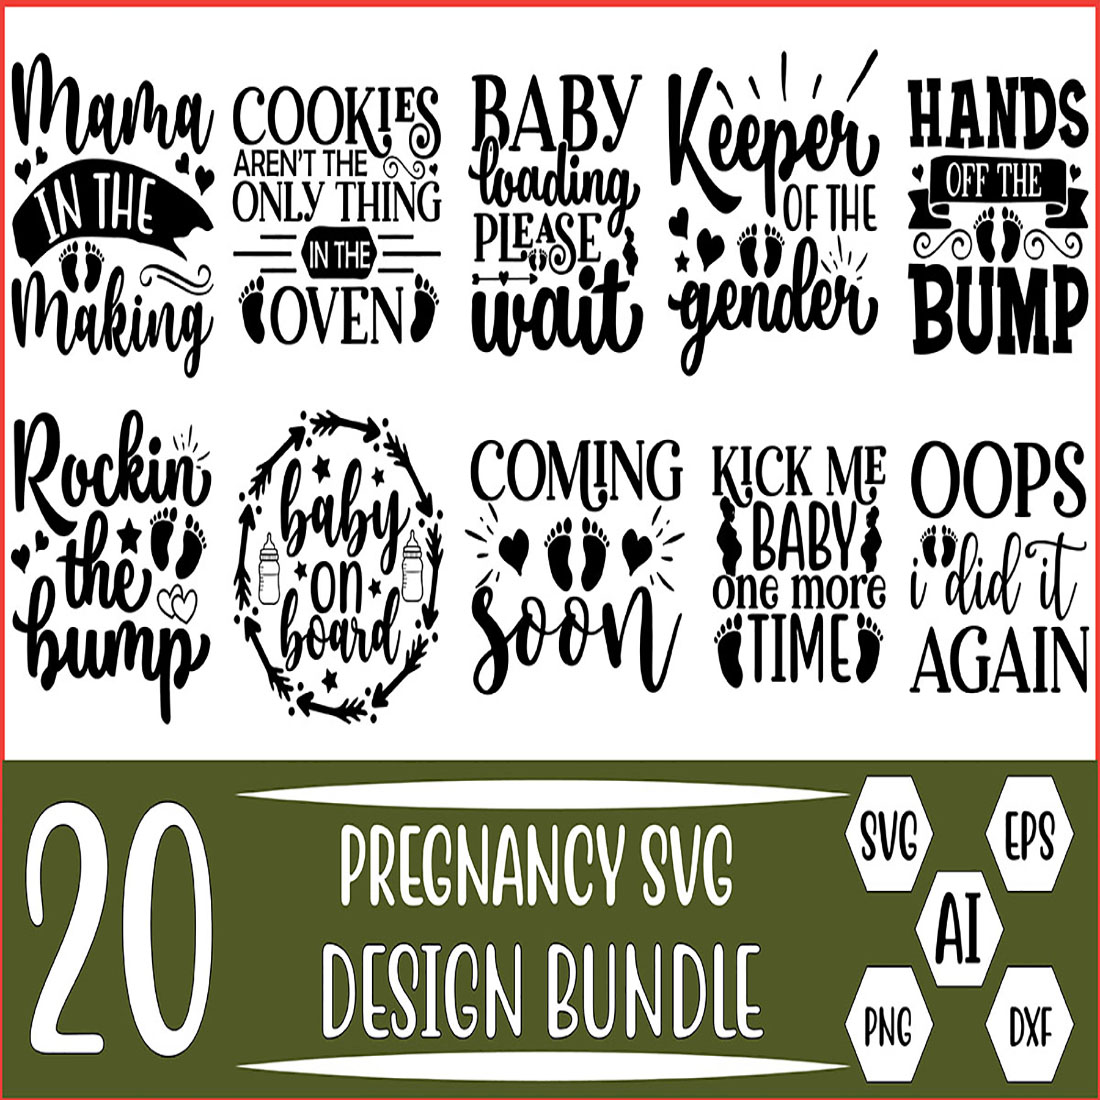 20 Pregnancy SVG Bundle Designs Vector Template cover image.